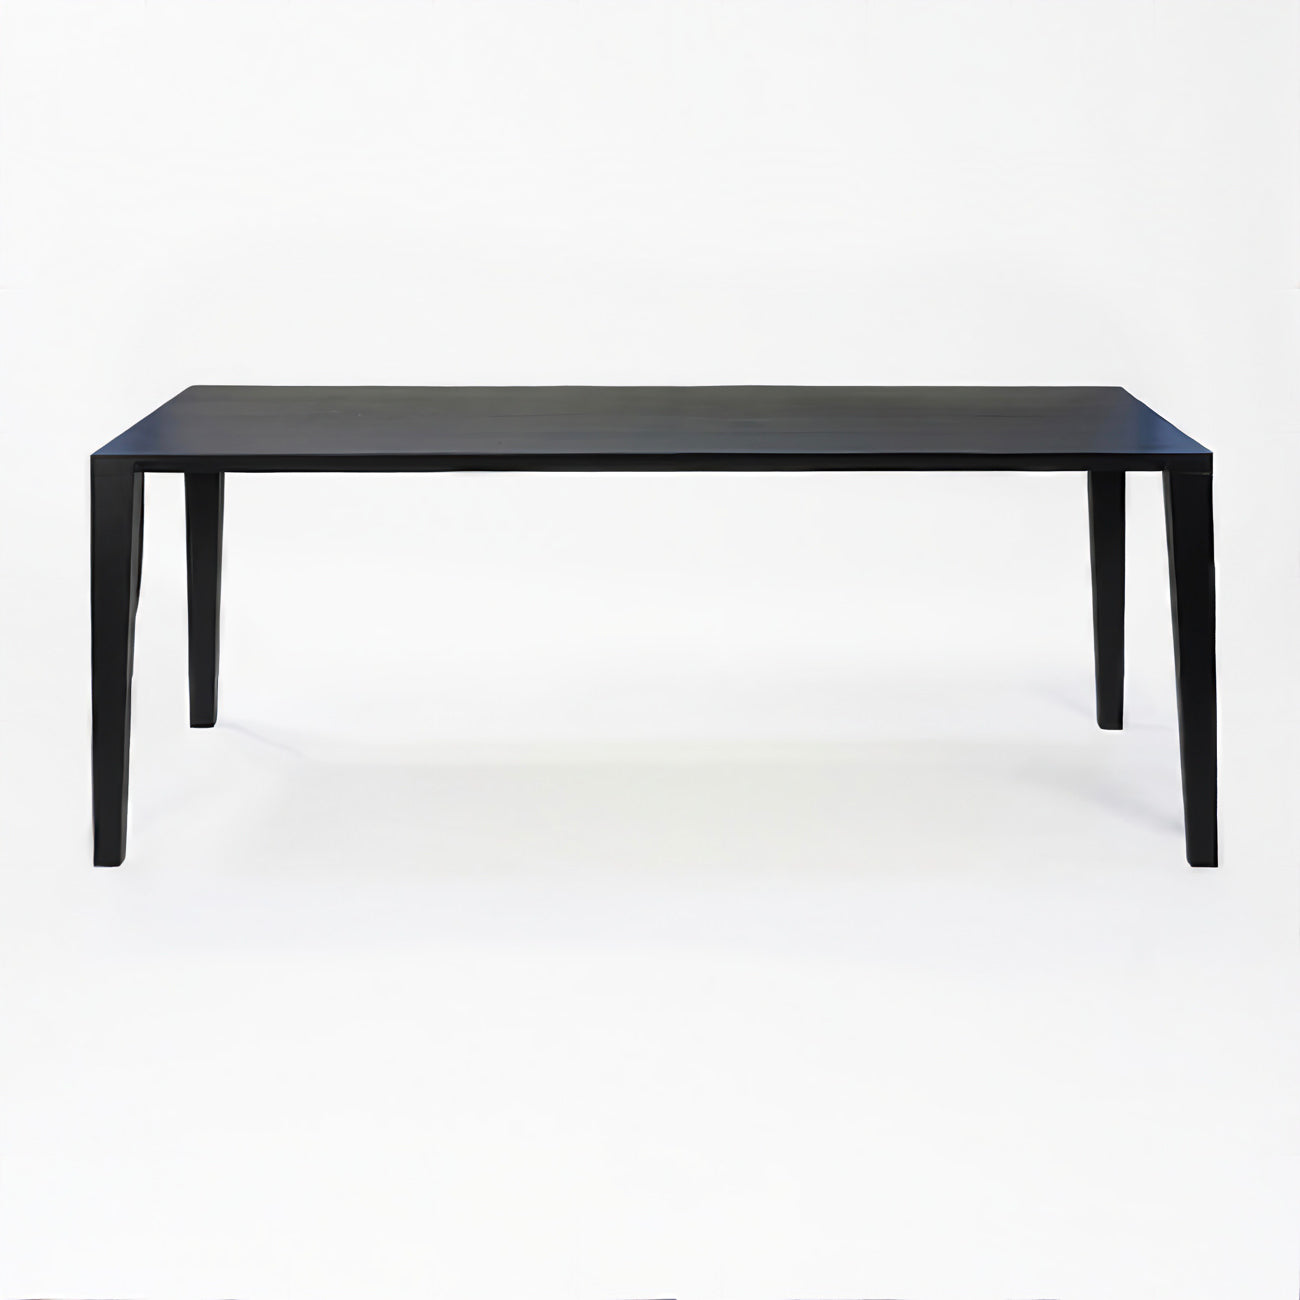 ARACOL BLACK table by Lambert